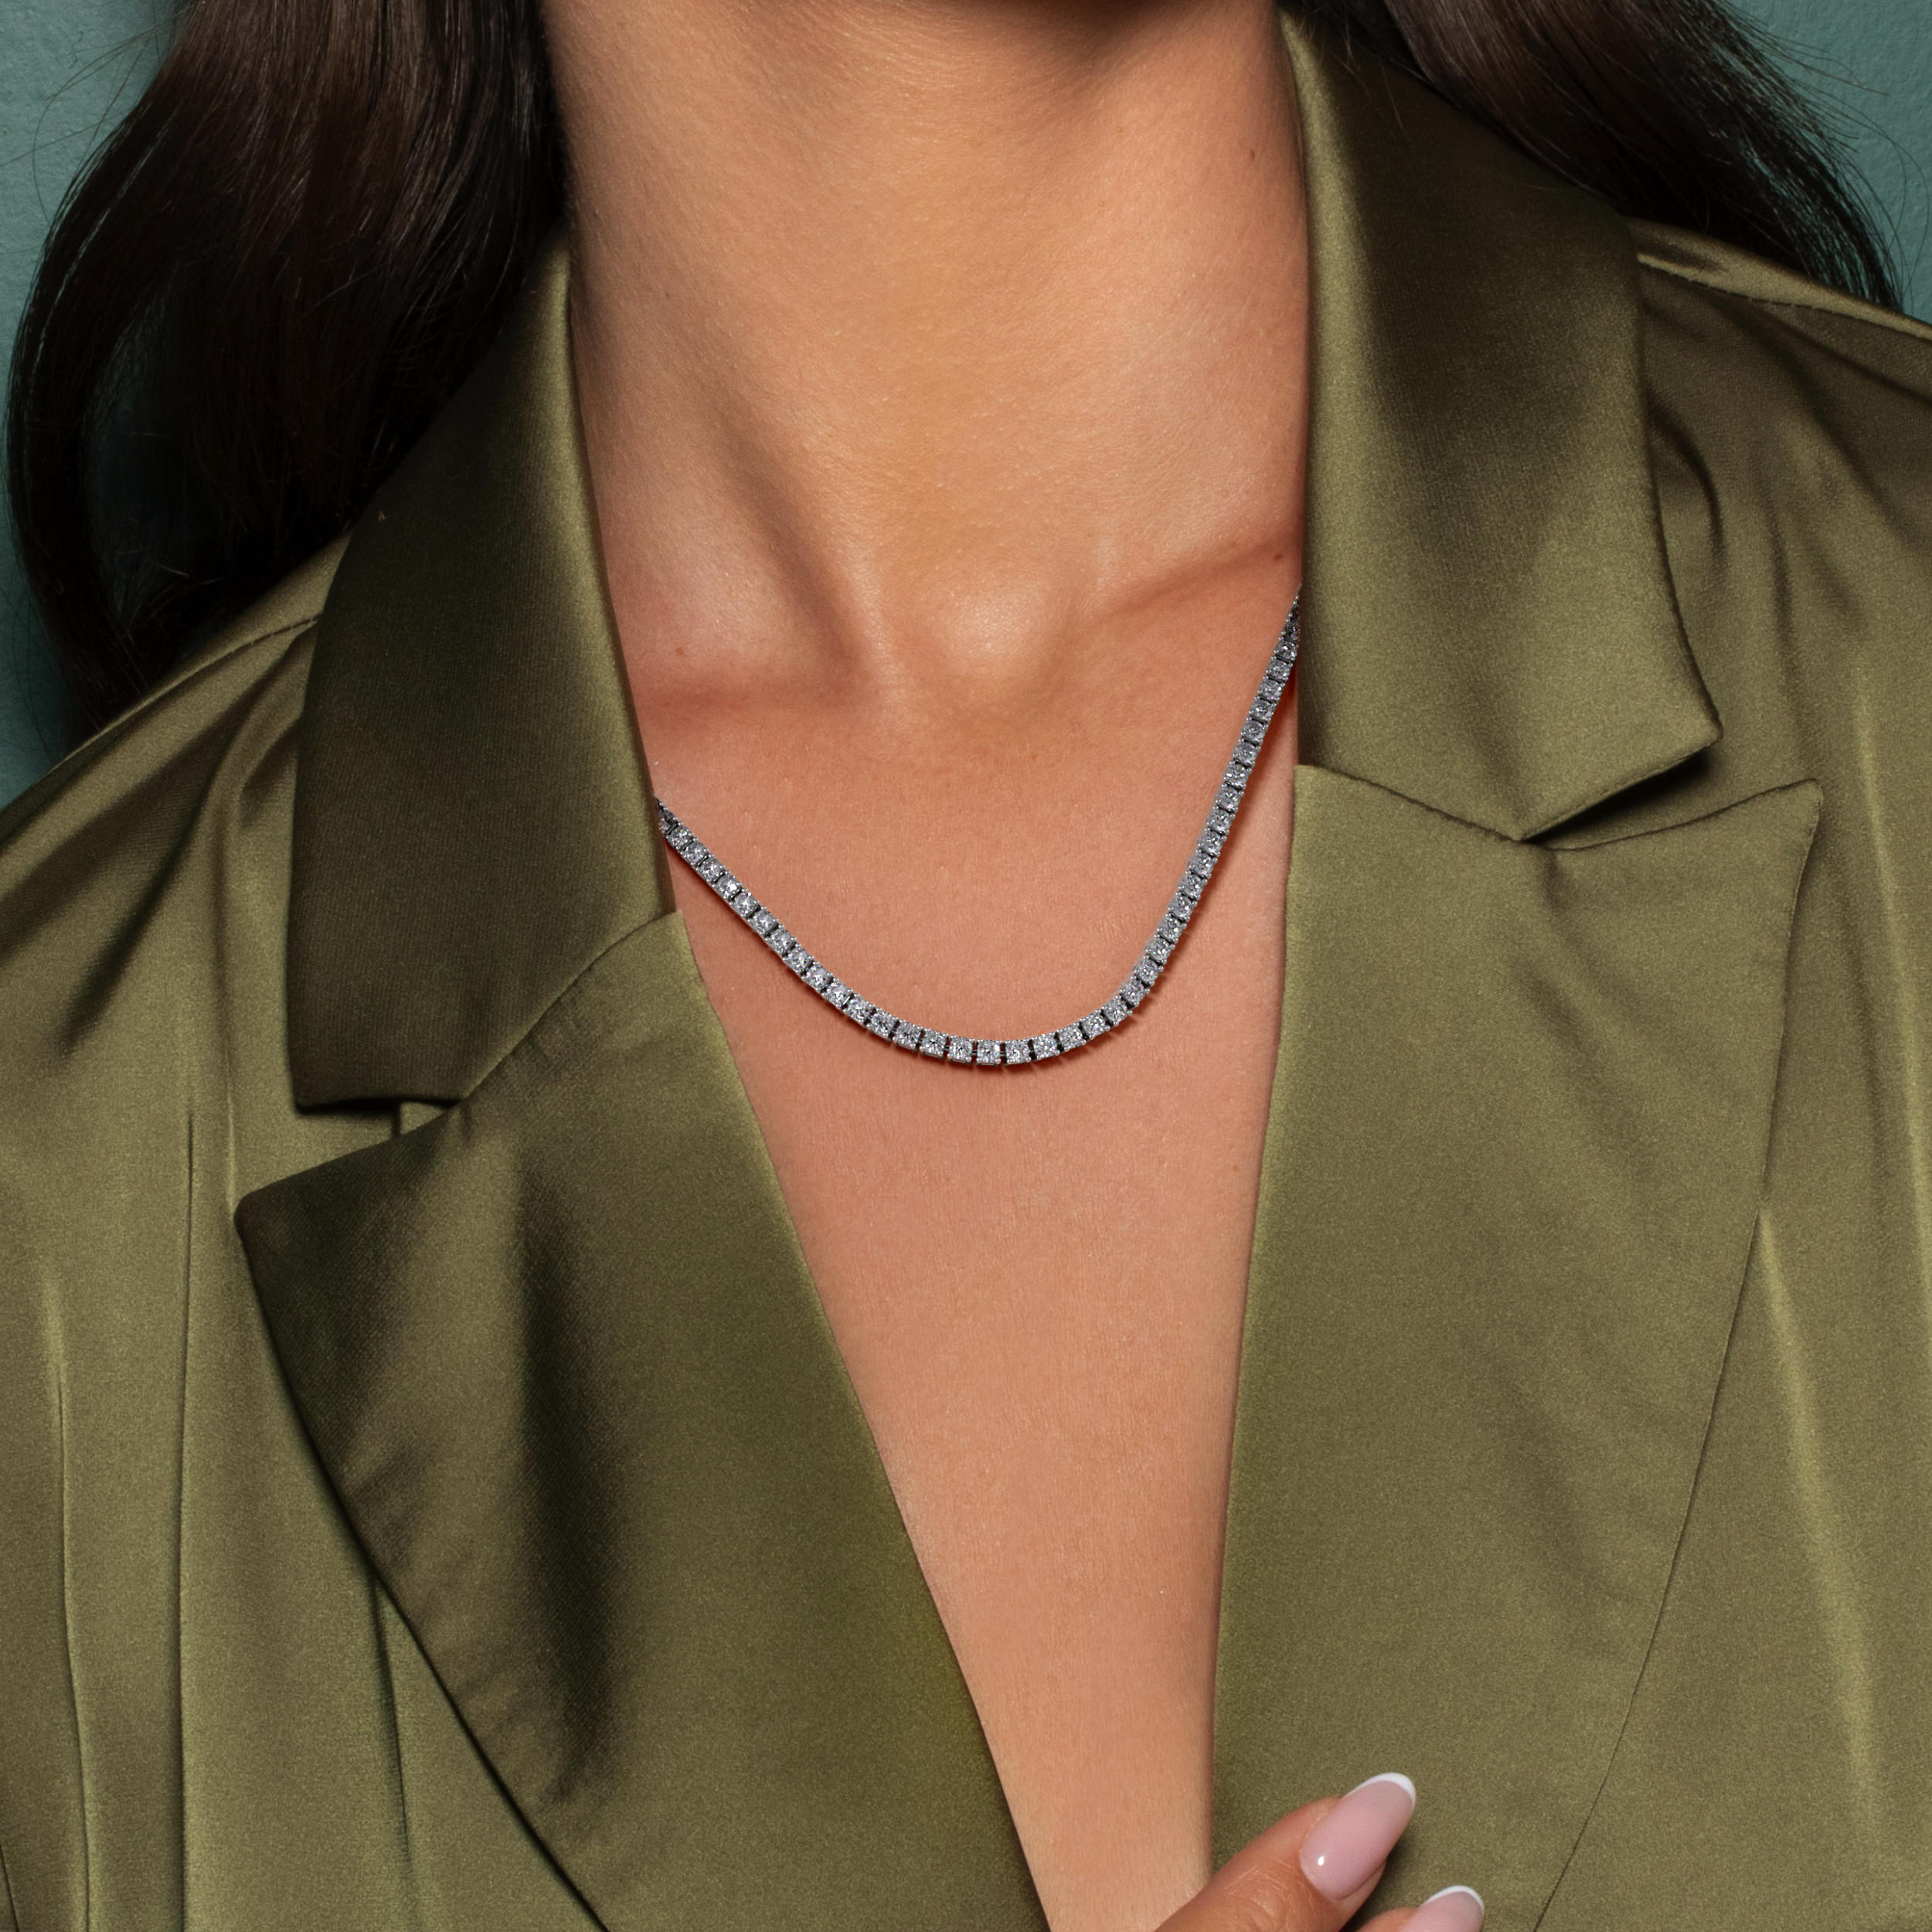 Callie Diamond Tennis Necklace Collier   (6.00 Carat) -18K White Gold